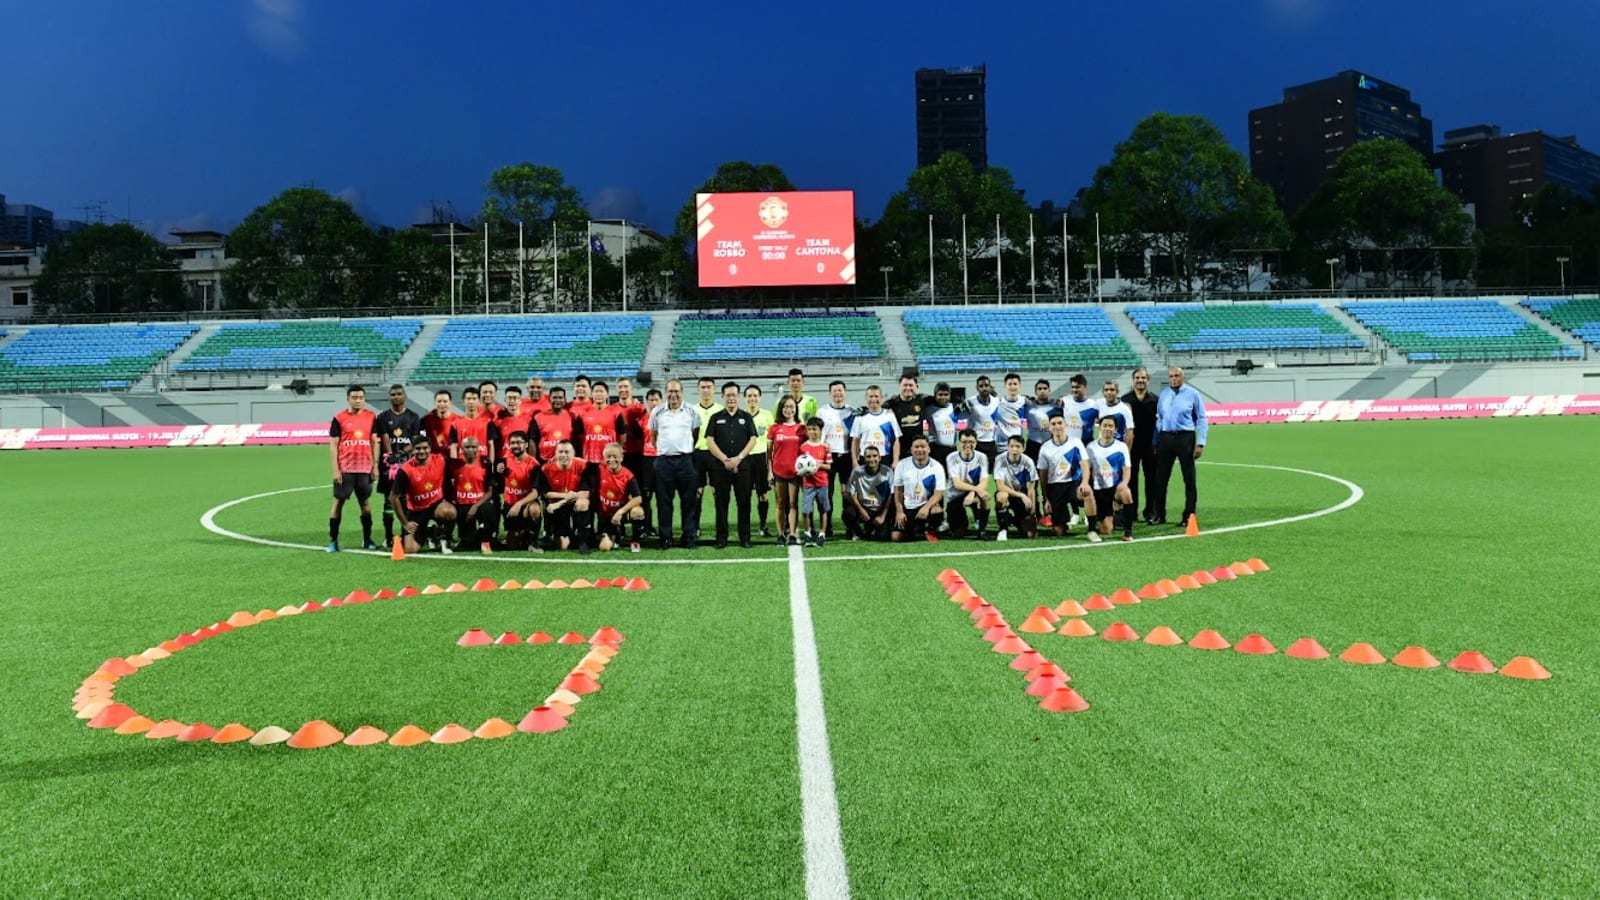 Memorial football match held for late prosecutor G Kannan at Jalan Besar Stadium